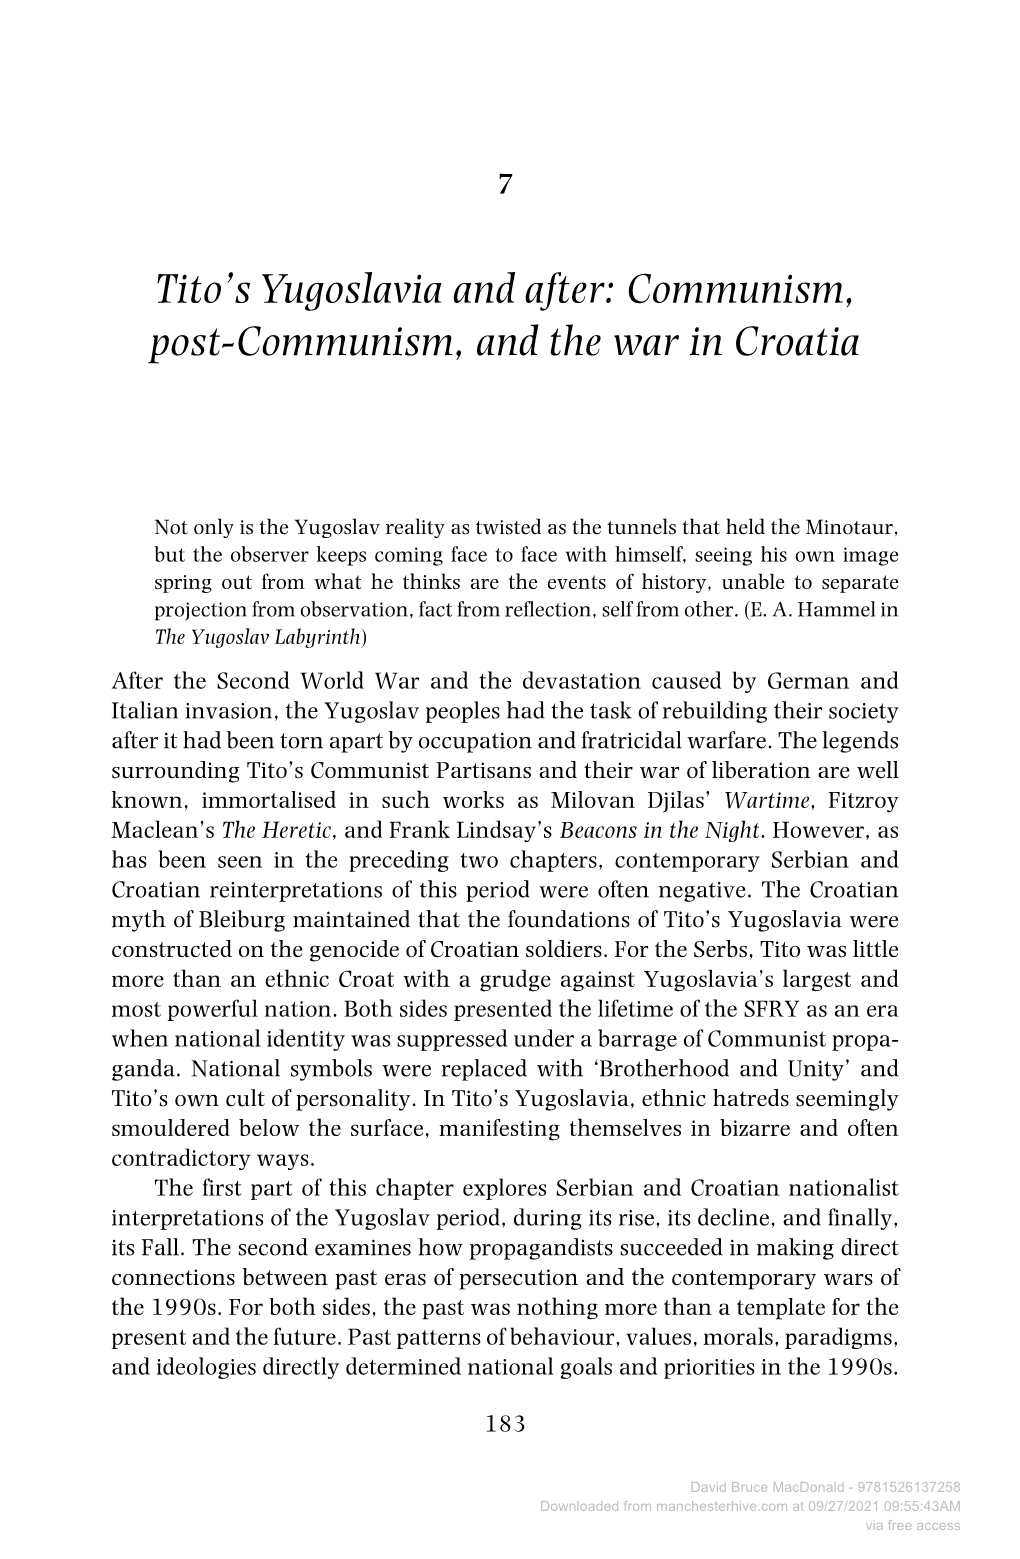 Communism, Post-Communism, and the War in Croatia